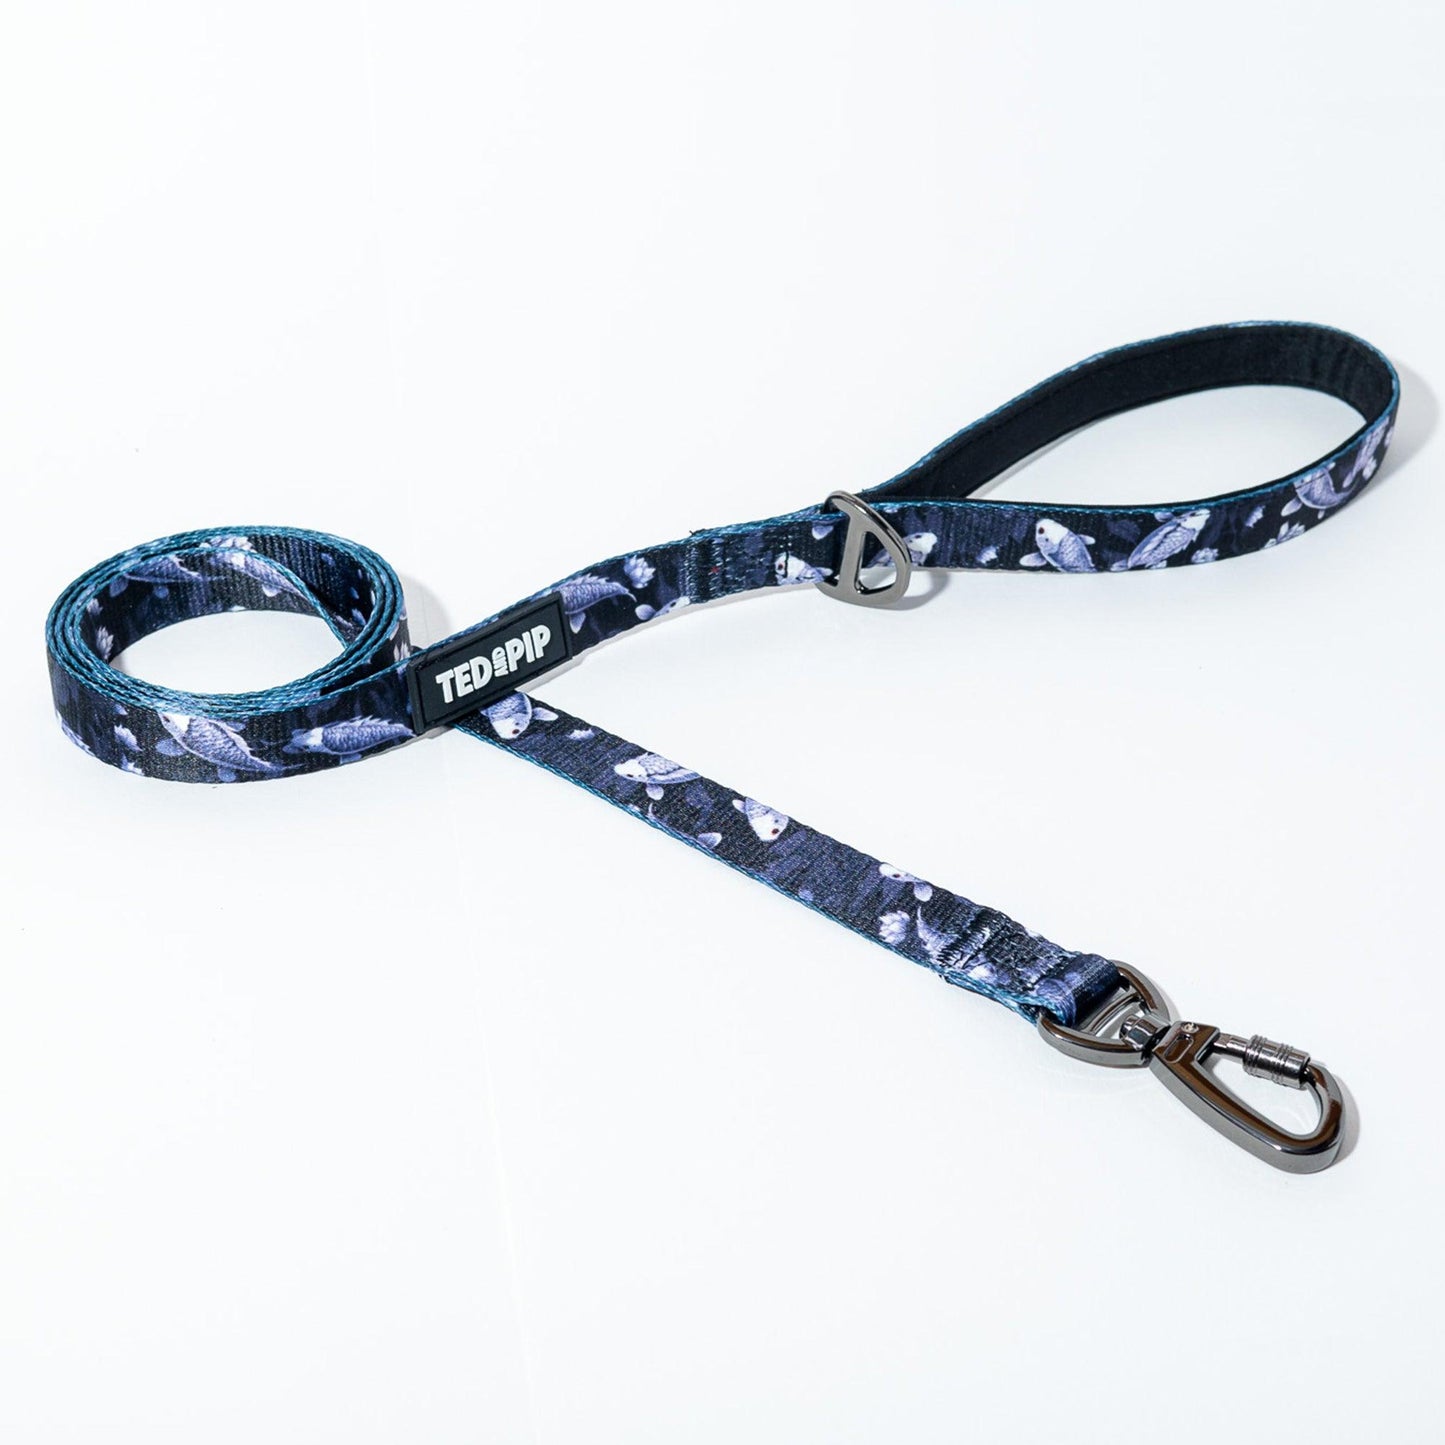 Koi Serenity - Stylish Lead & Collar Set - Ted & Pip - Stylish Premium Dogwear